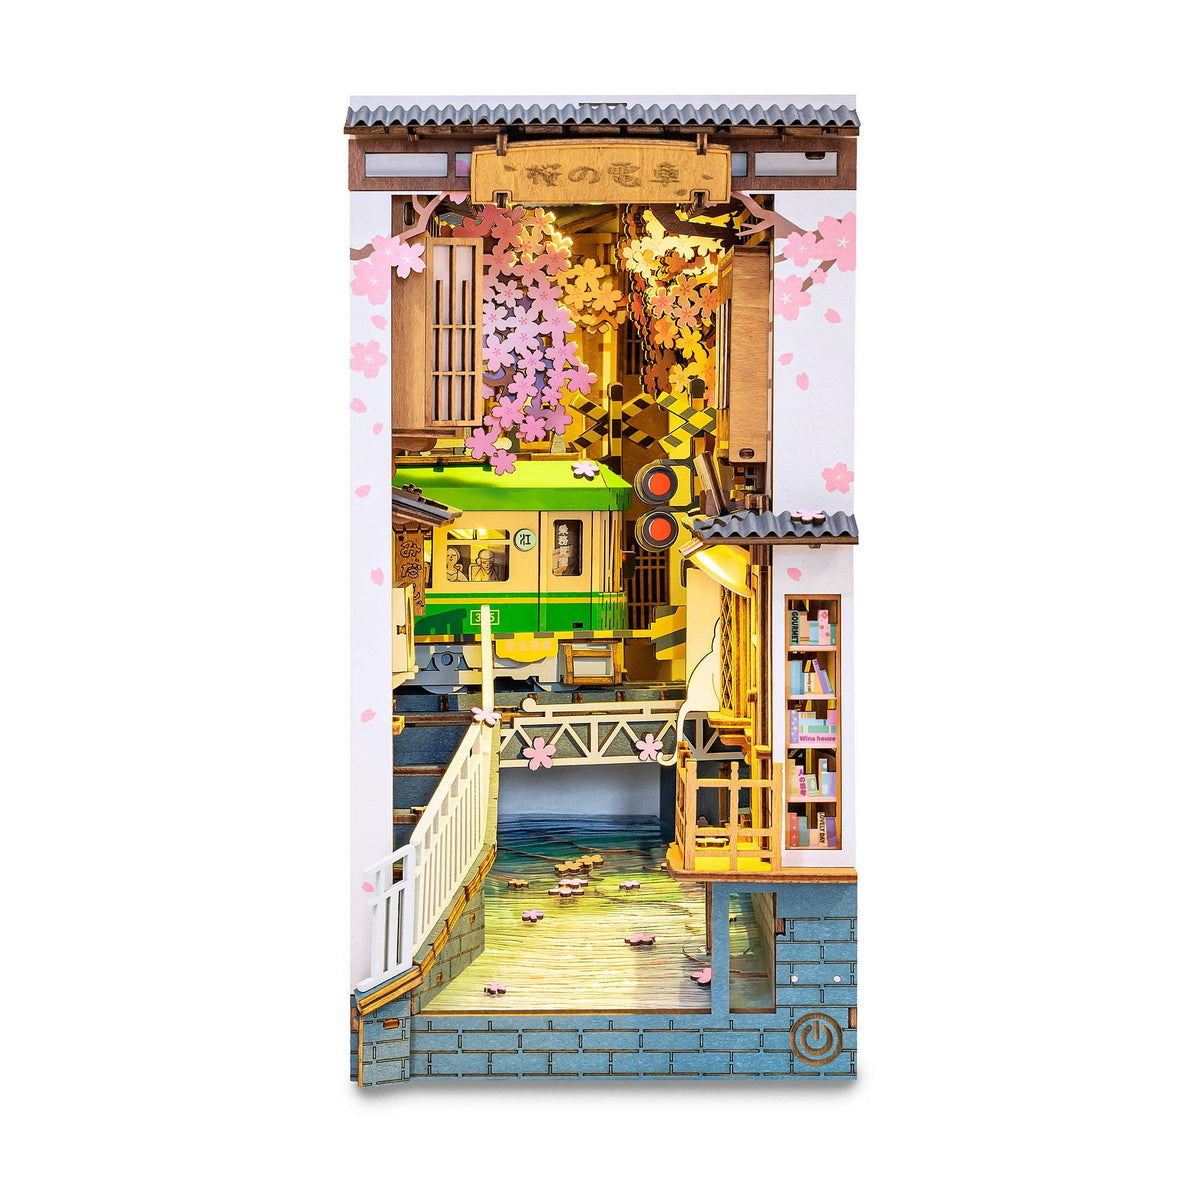 Sakura Tram - Rolife DIY Book Nook Kit-Building &amp; Construction-Yellow Springs Toy Company